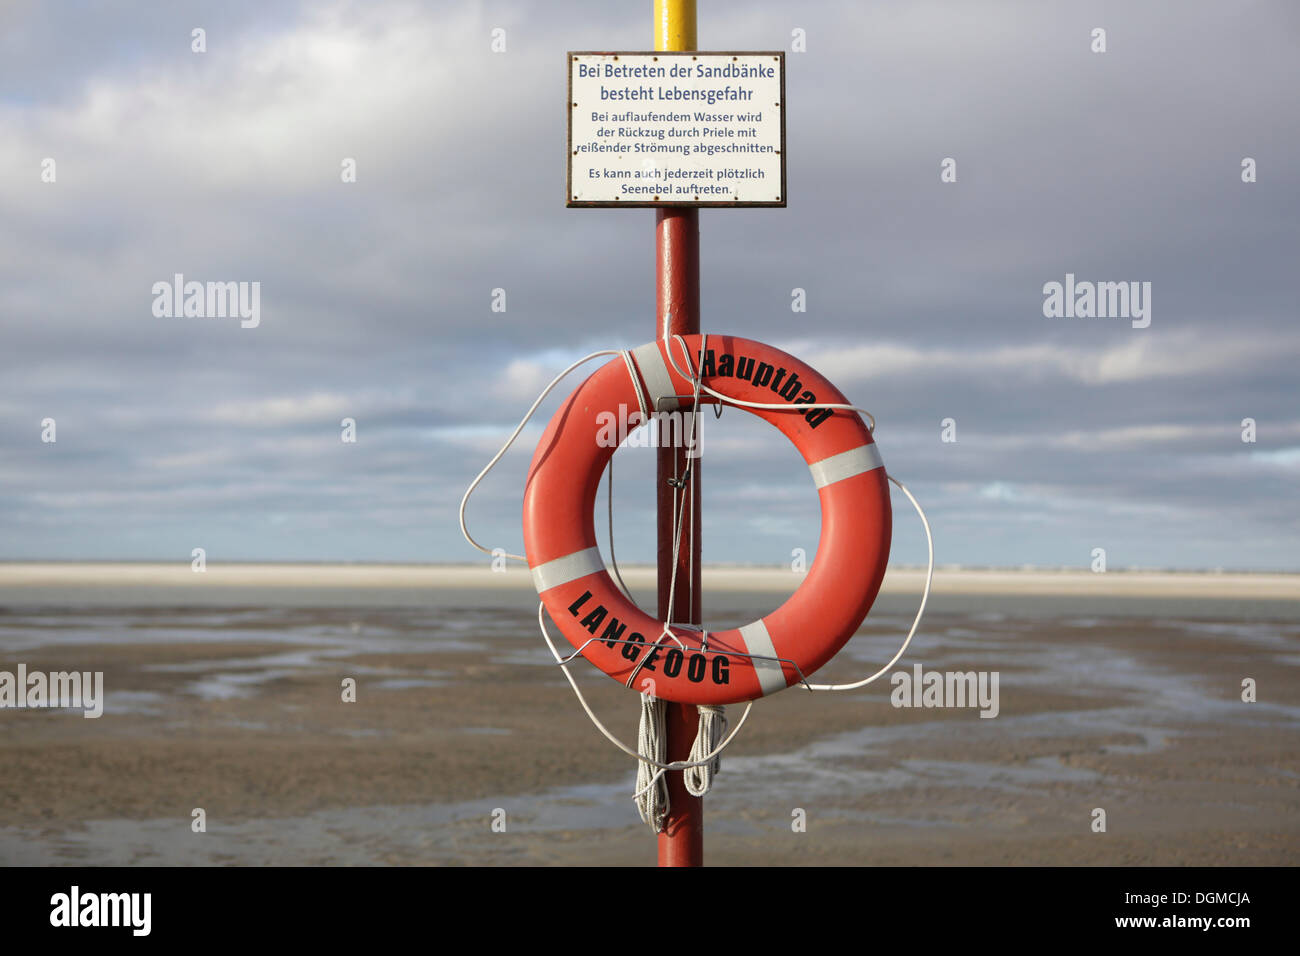 Lifebuoy on the main beach, Langeoog, Ostfriesische Inseln, Lower Saxony, Germany Stock Photo